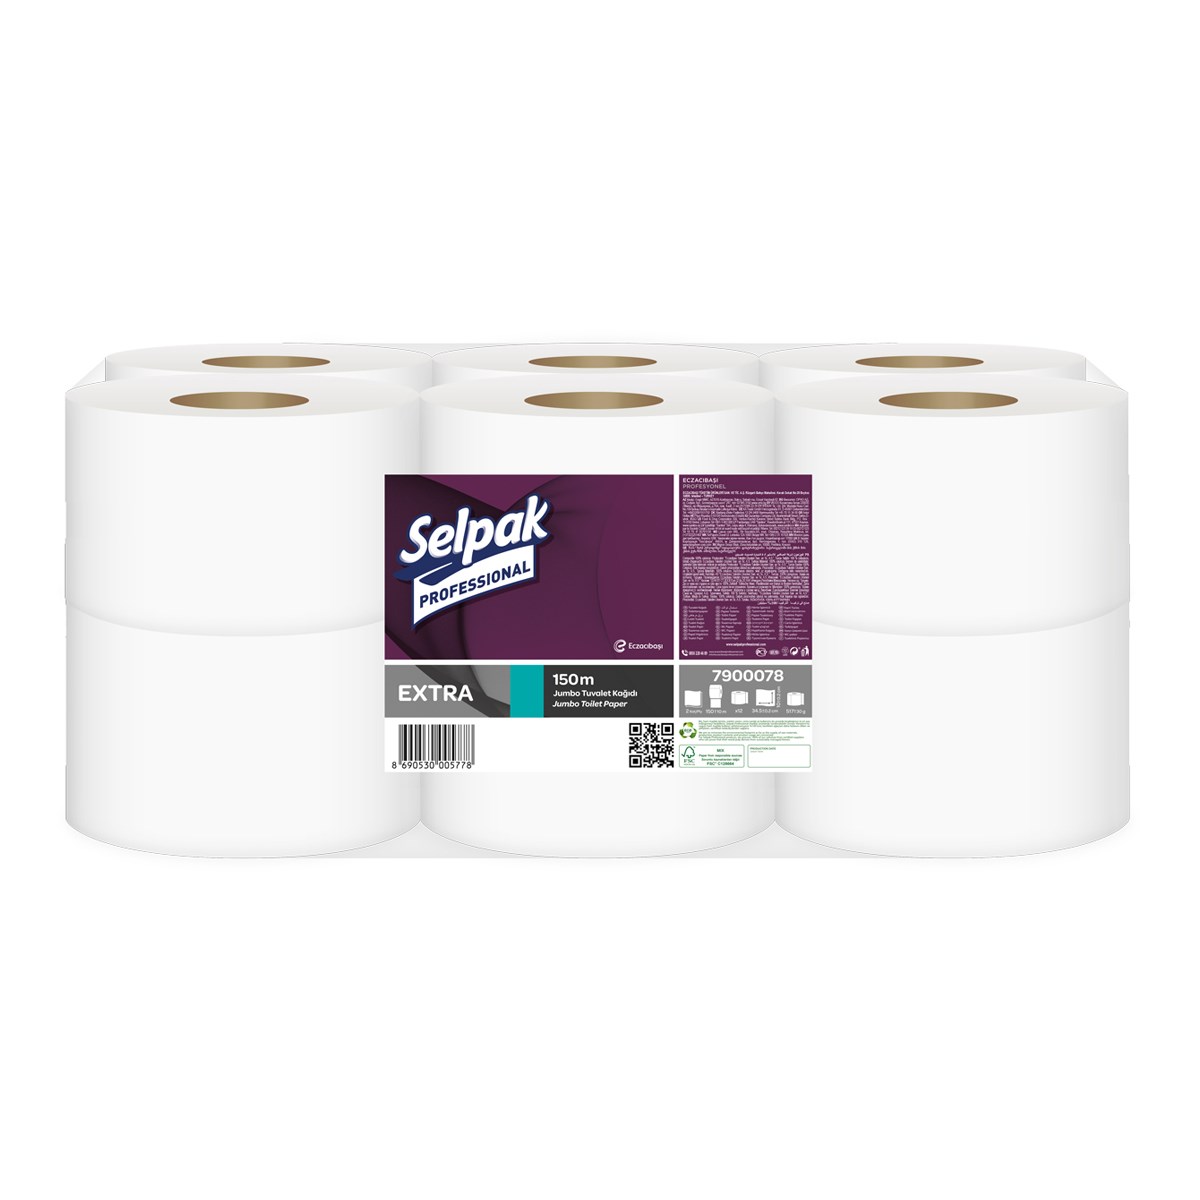 Selpak Professional Extra Jumbo Tuvalet Kağıdı 150 M 12'li Paket | 7900078